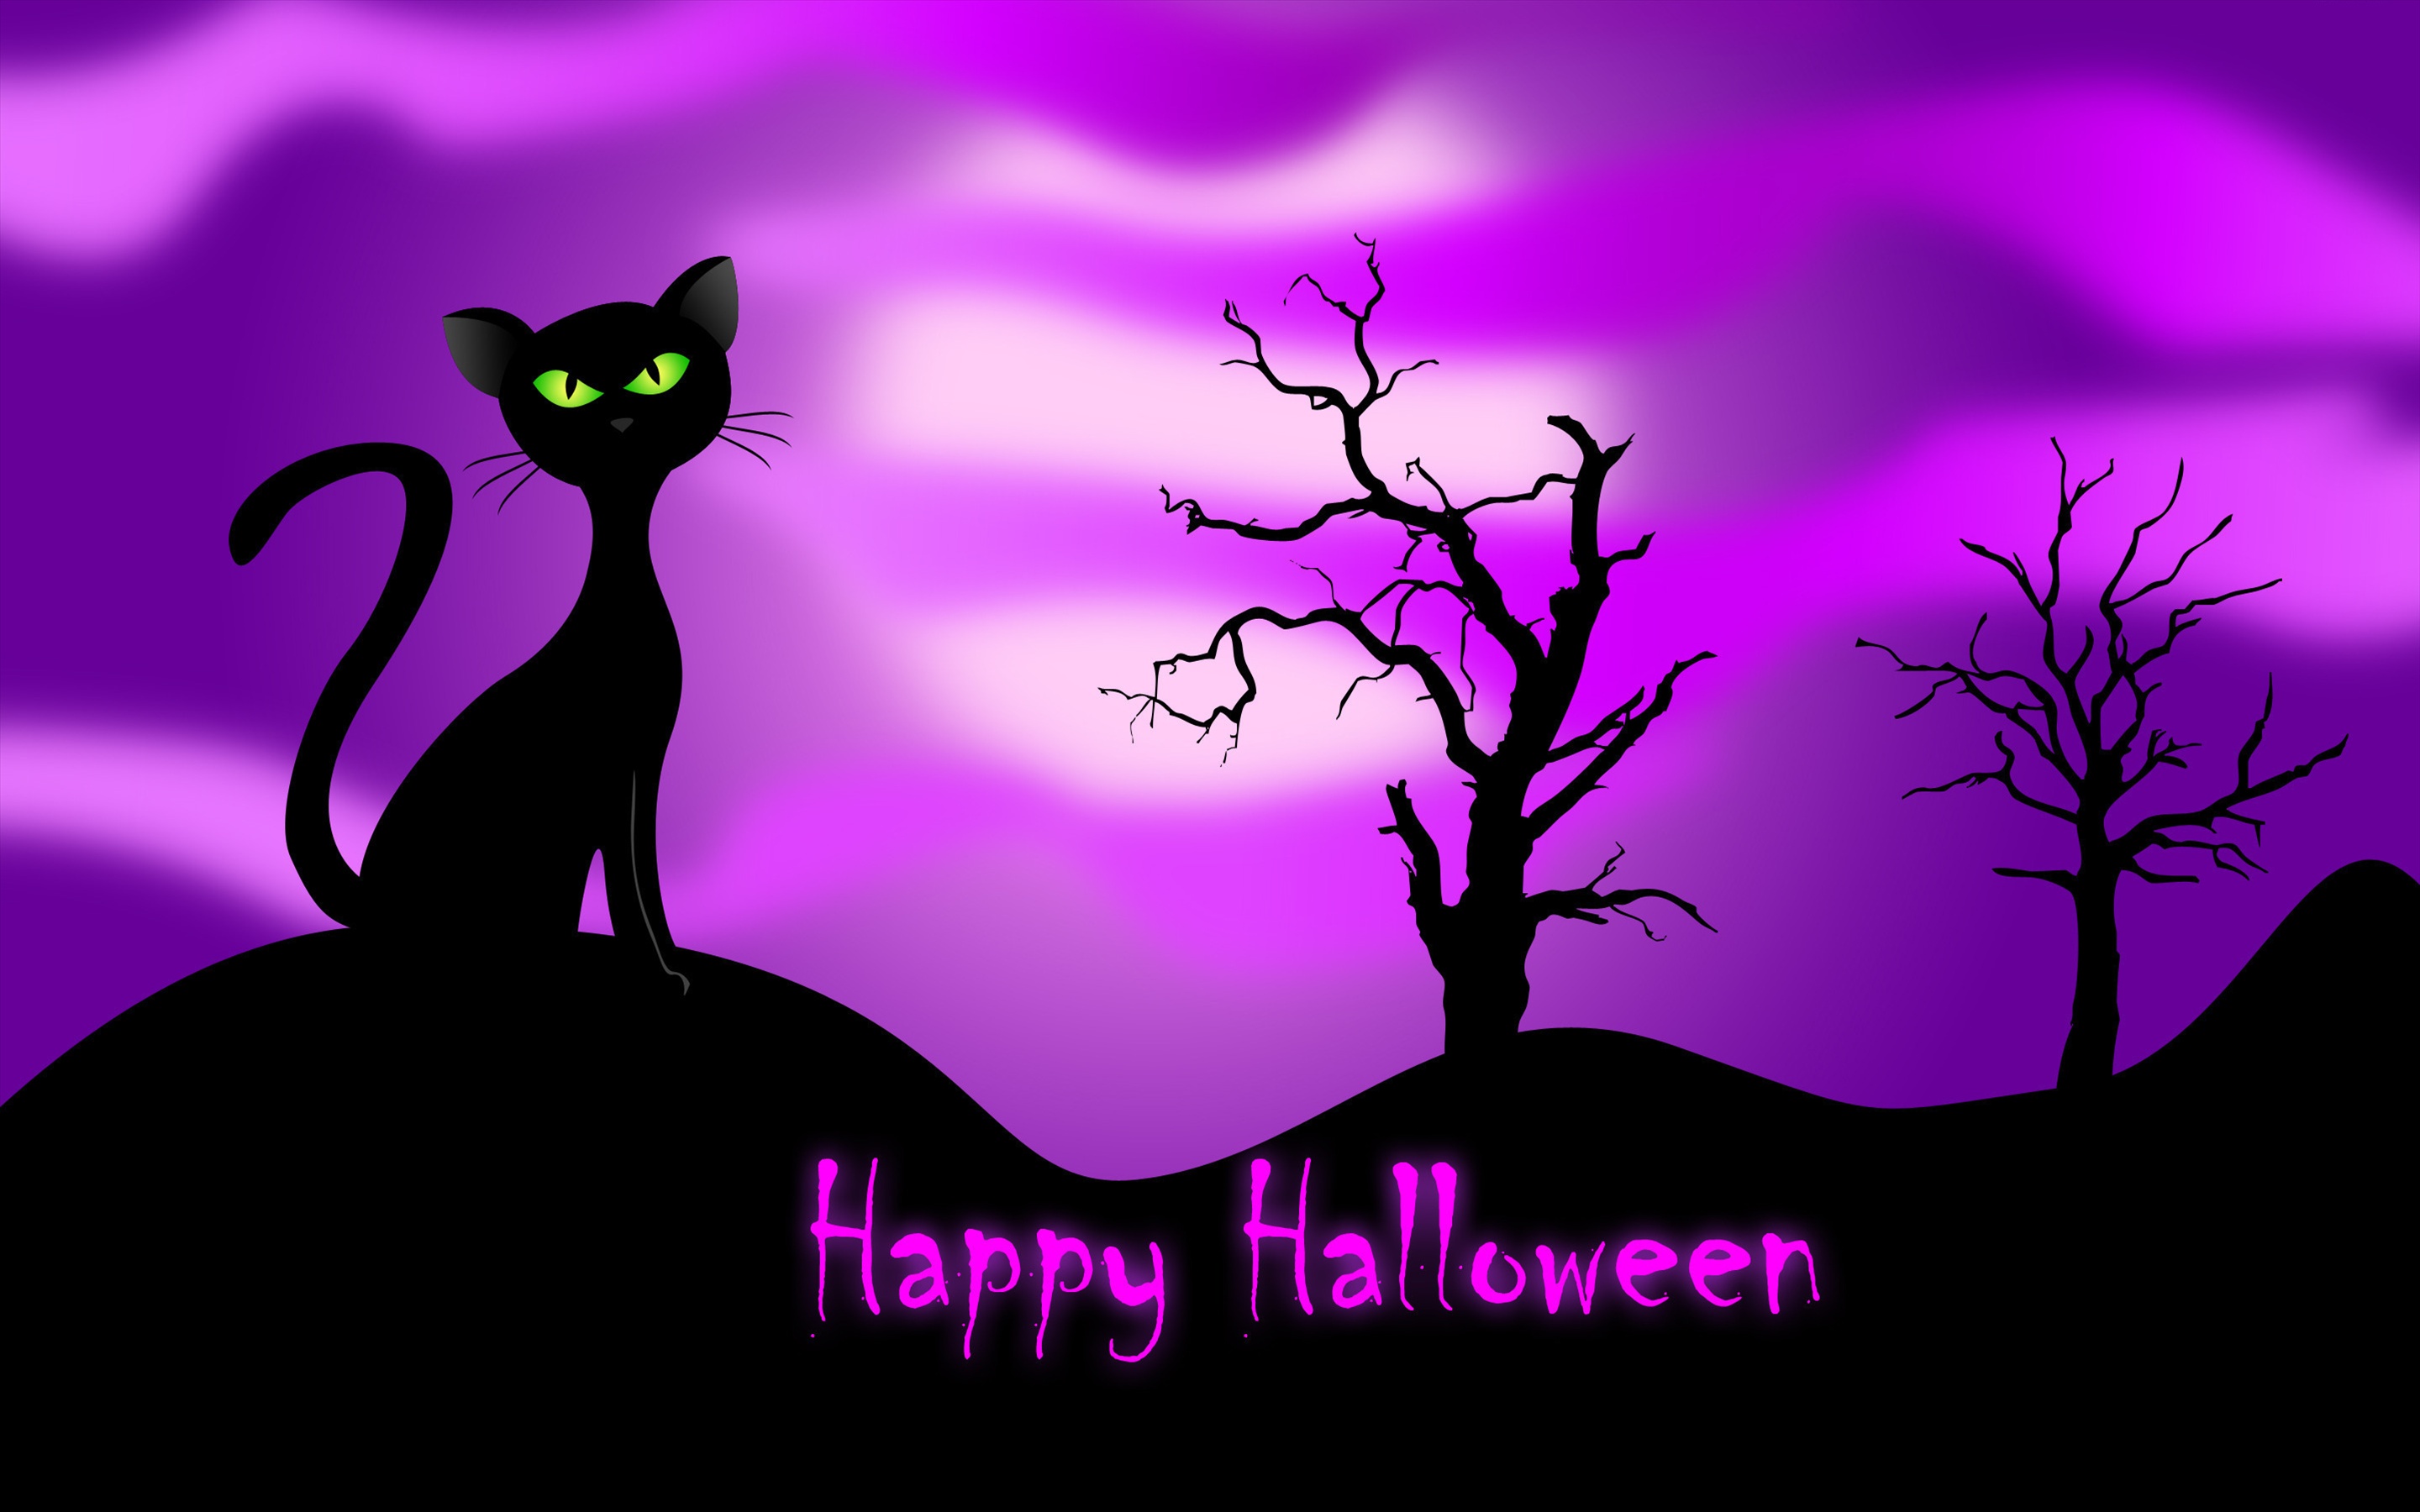 Happy Halloween Trees Black Cat Fall Purple HD Wallpaper